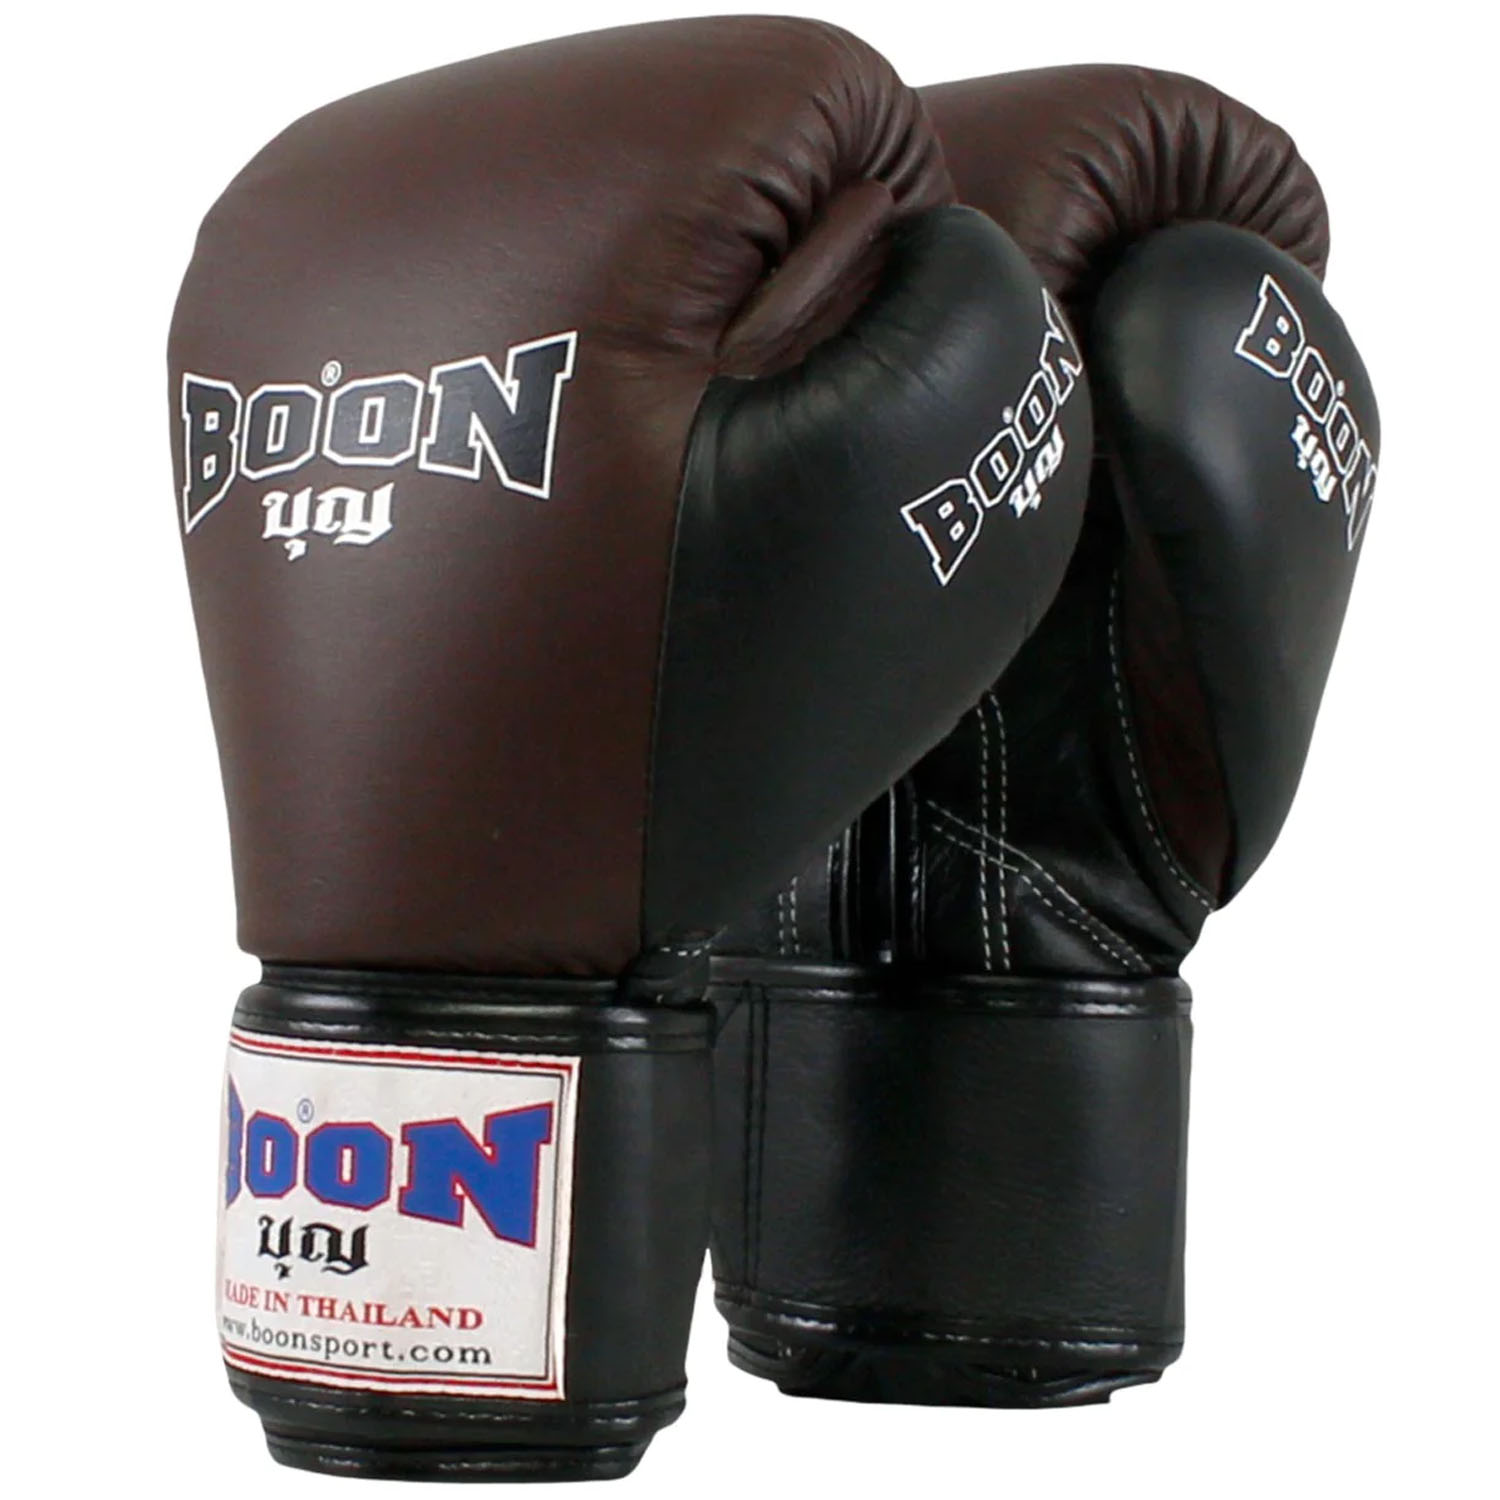 BOON Boxhandschuhe, BGCBK, Compact Velcro, braun-schwarz, 14 Oz